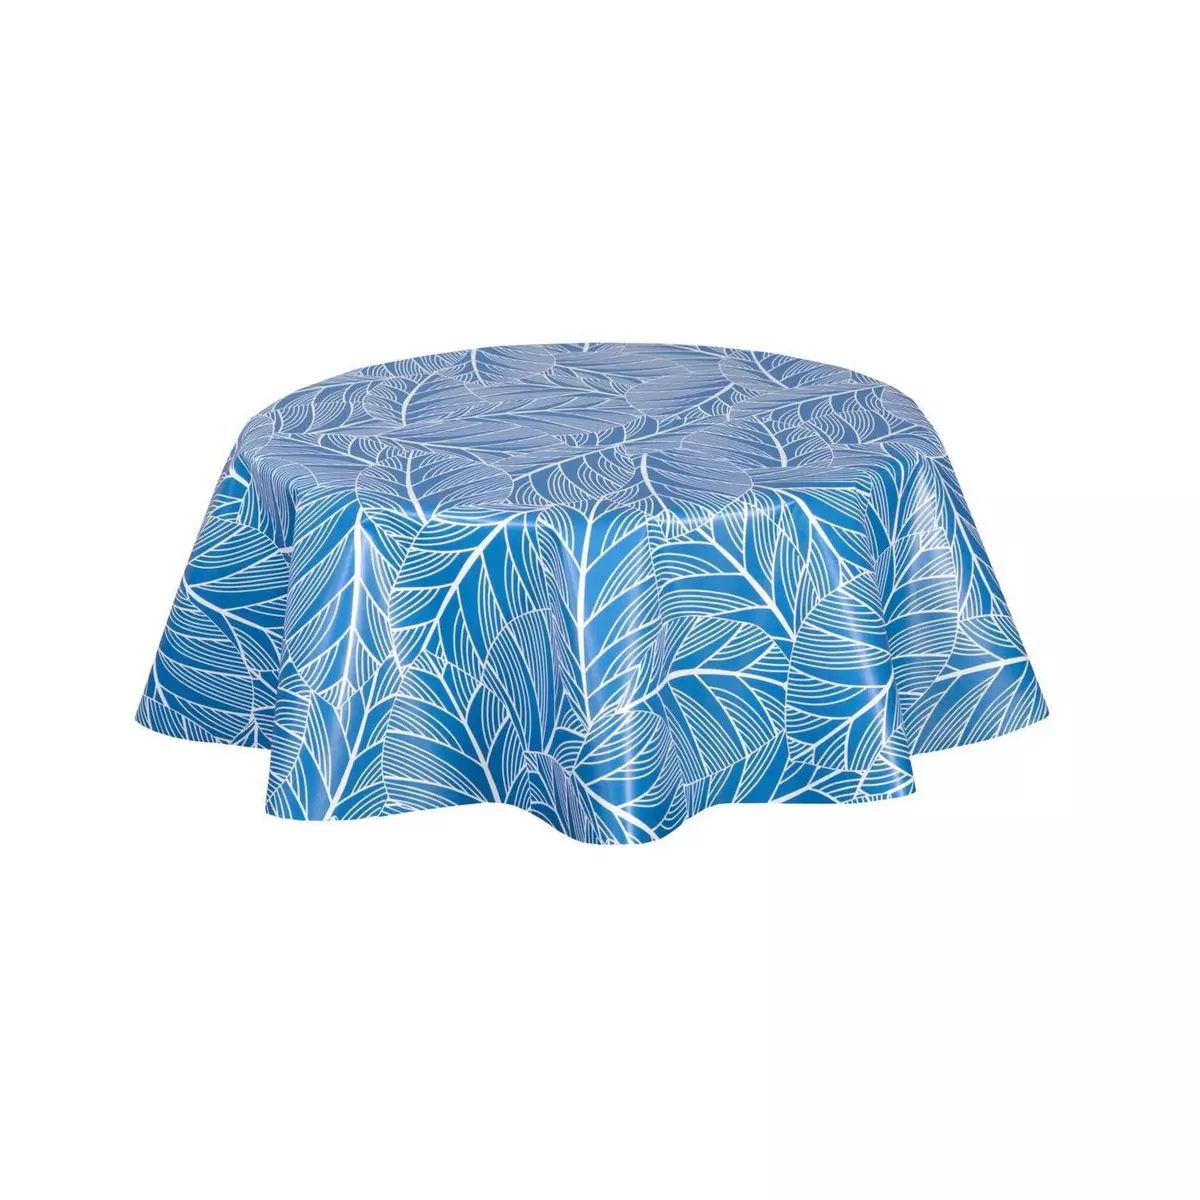 HABITABLE Nappe en toile cirée ronde Eloa - Diam. 135 cm - Bleu